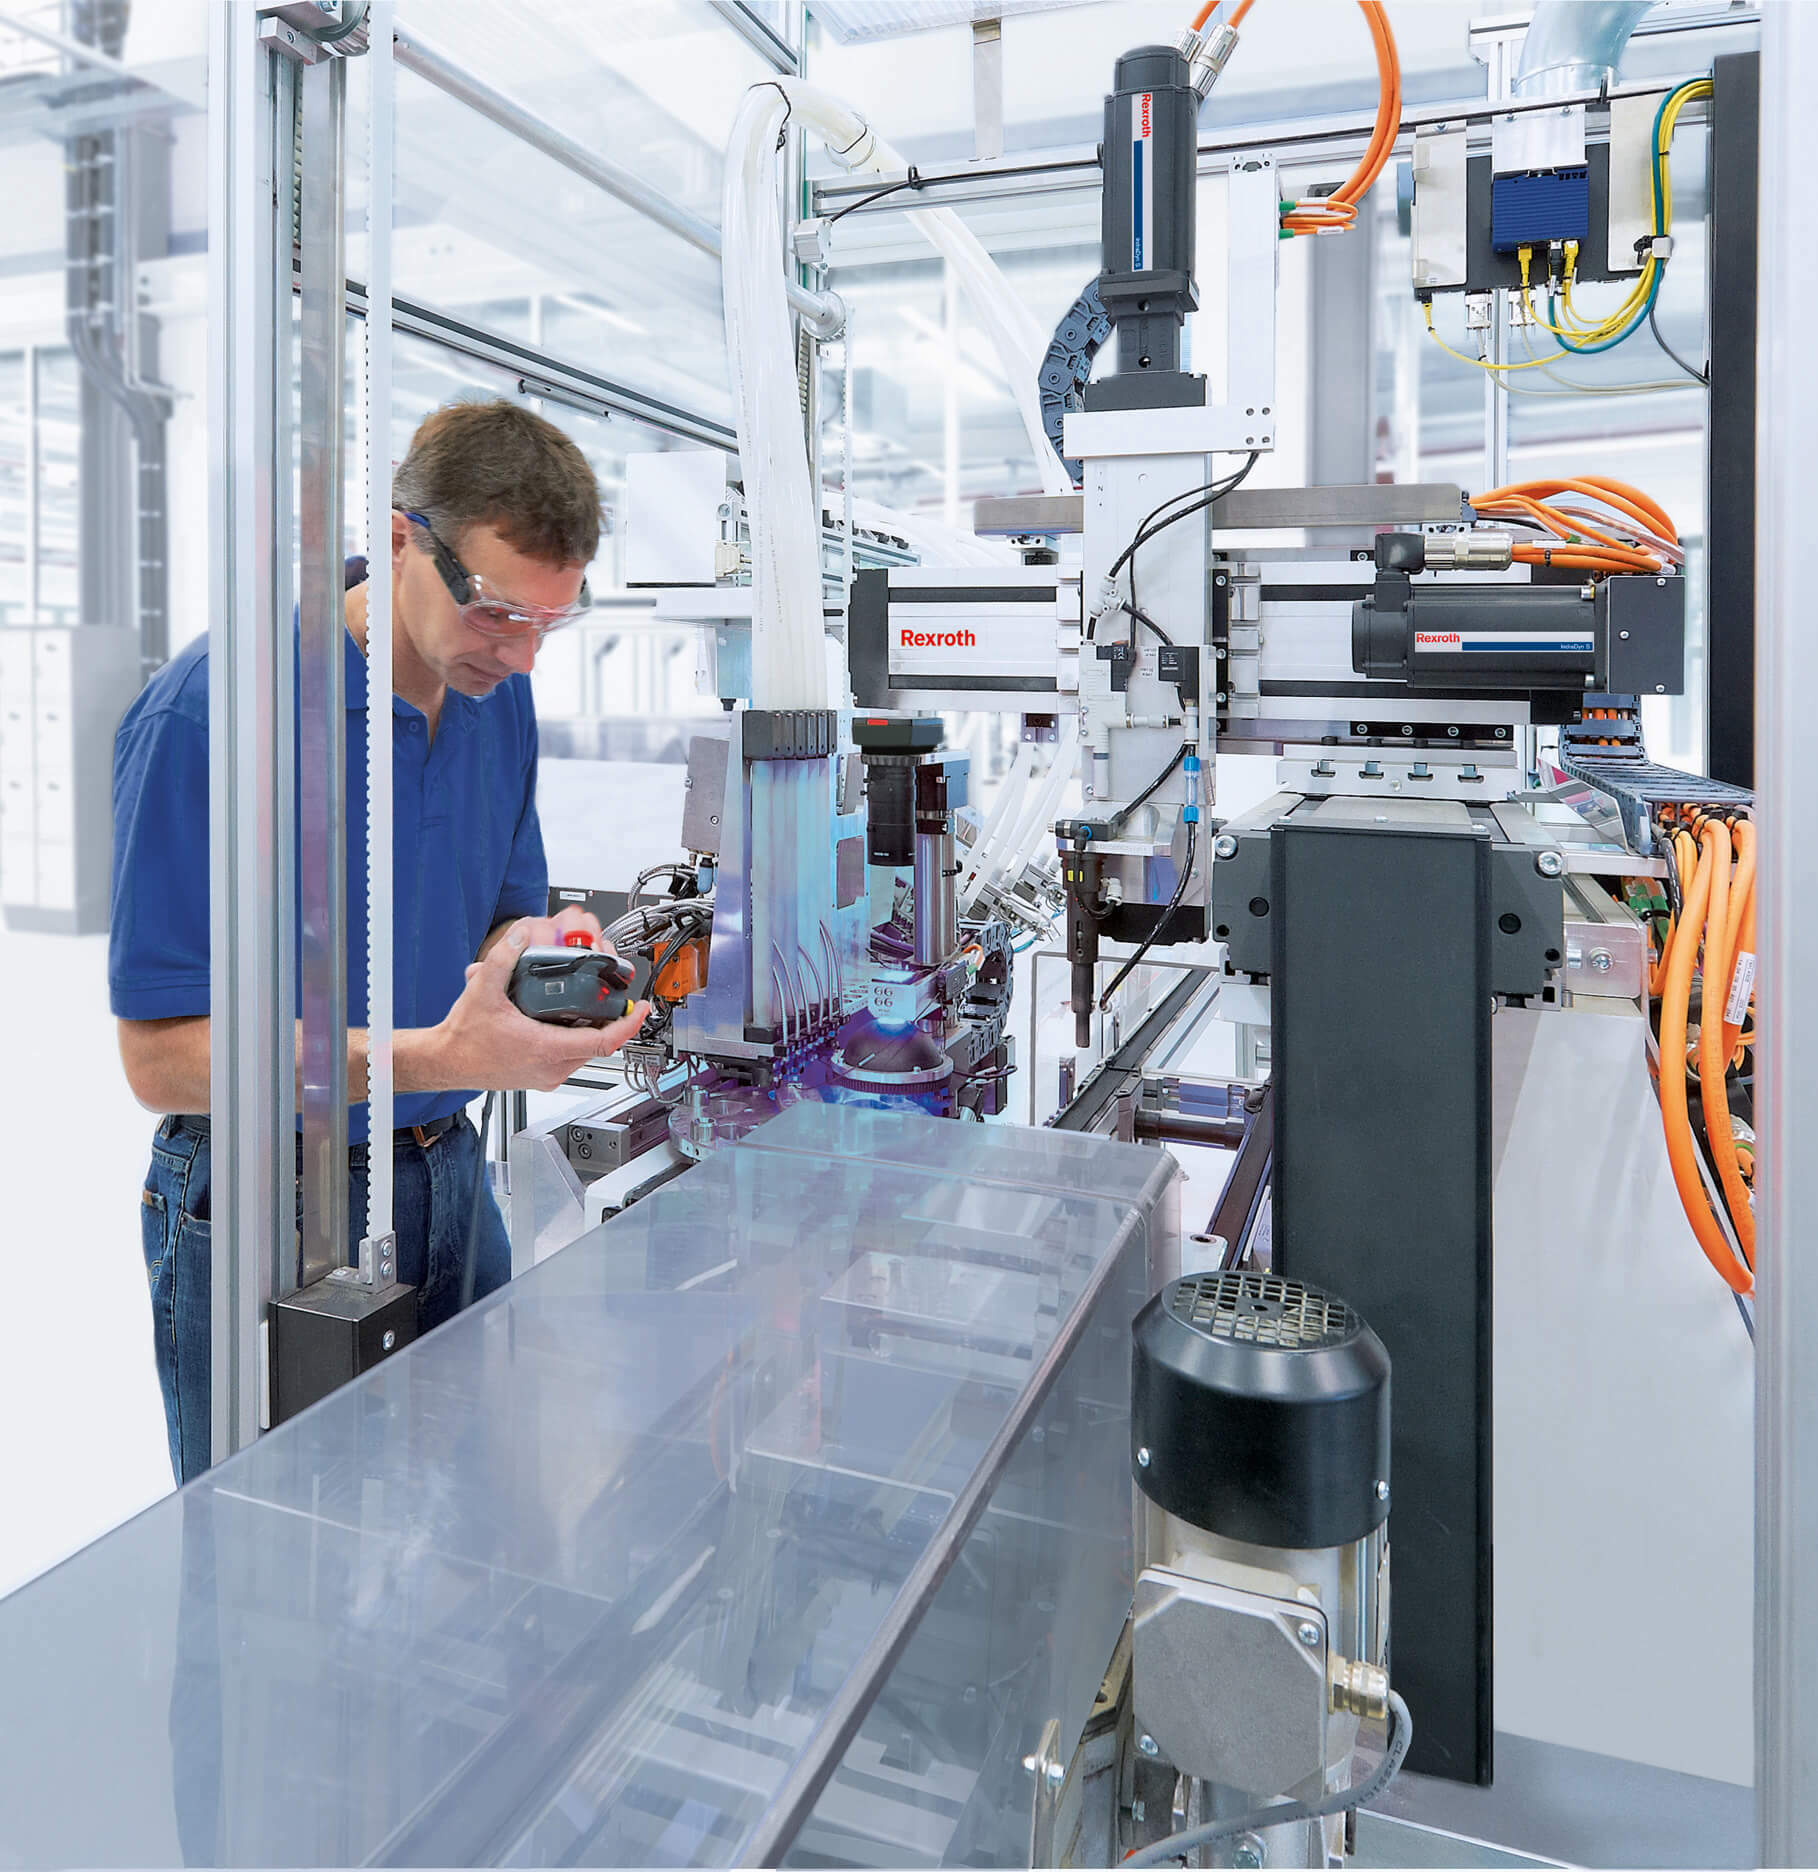 Bosch Rexroth Service Point – BVS Industrie-Elektronik